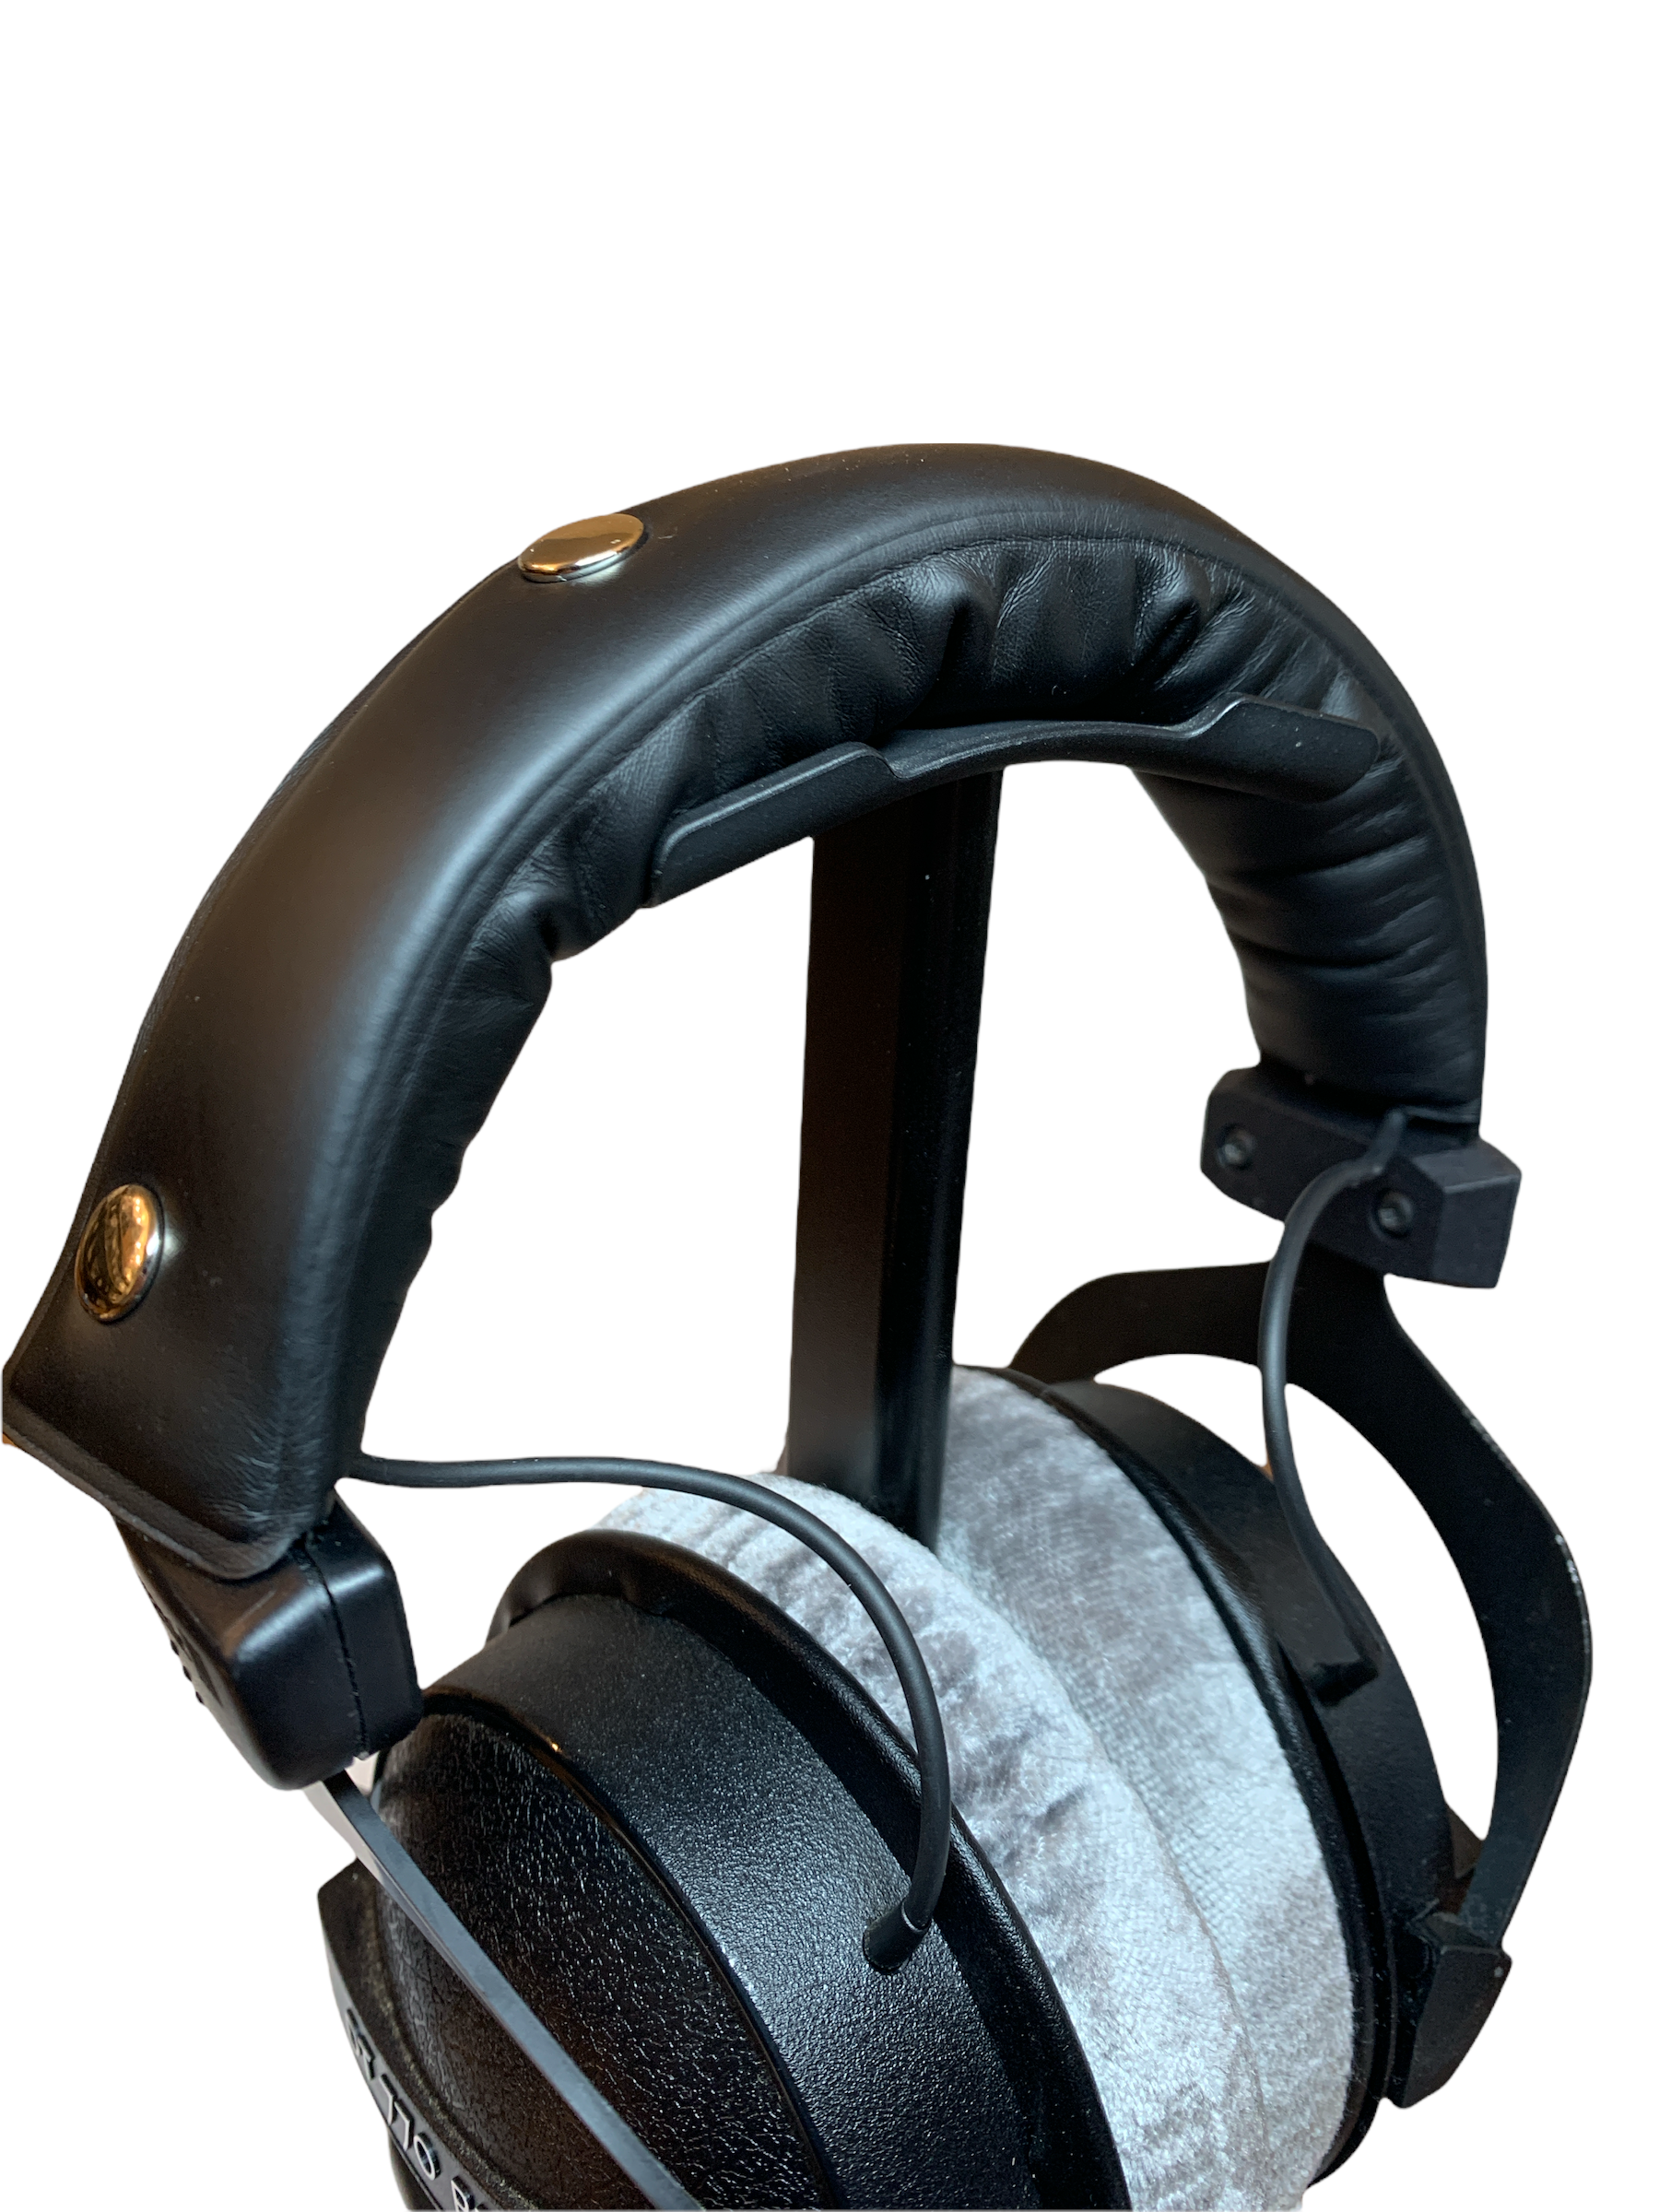 CentralSound Replacement Headband Pad for Beyerdynamic Headphones - CentralSound